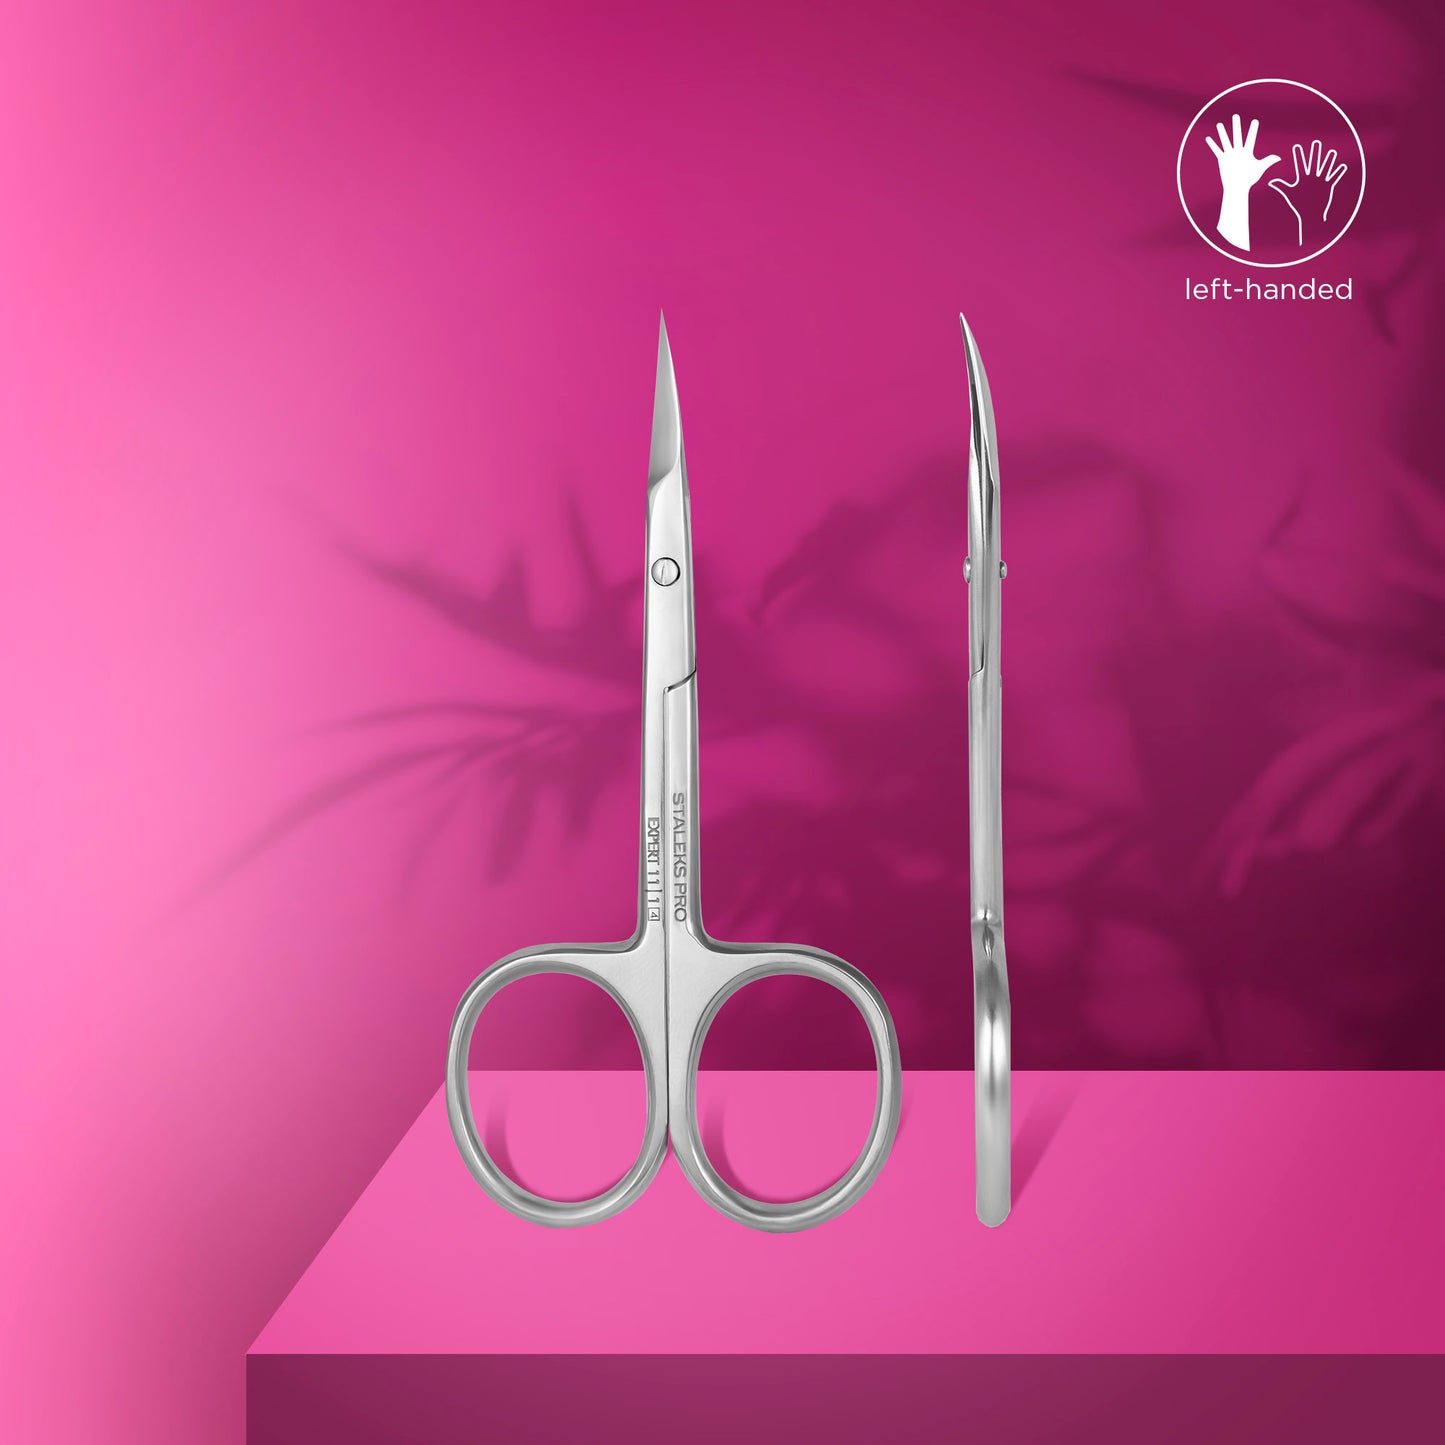 STALEKS Professional cuticle scissors for left-handed users Staleks Pro Expert 11 Type 1